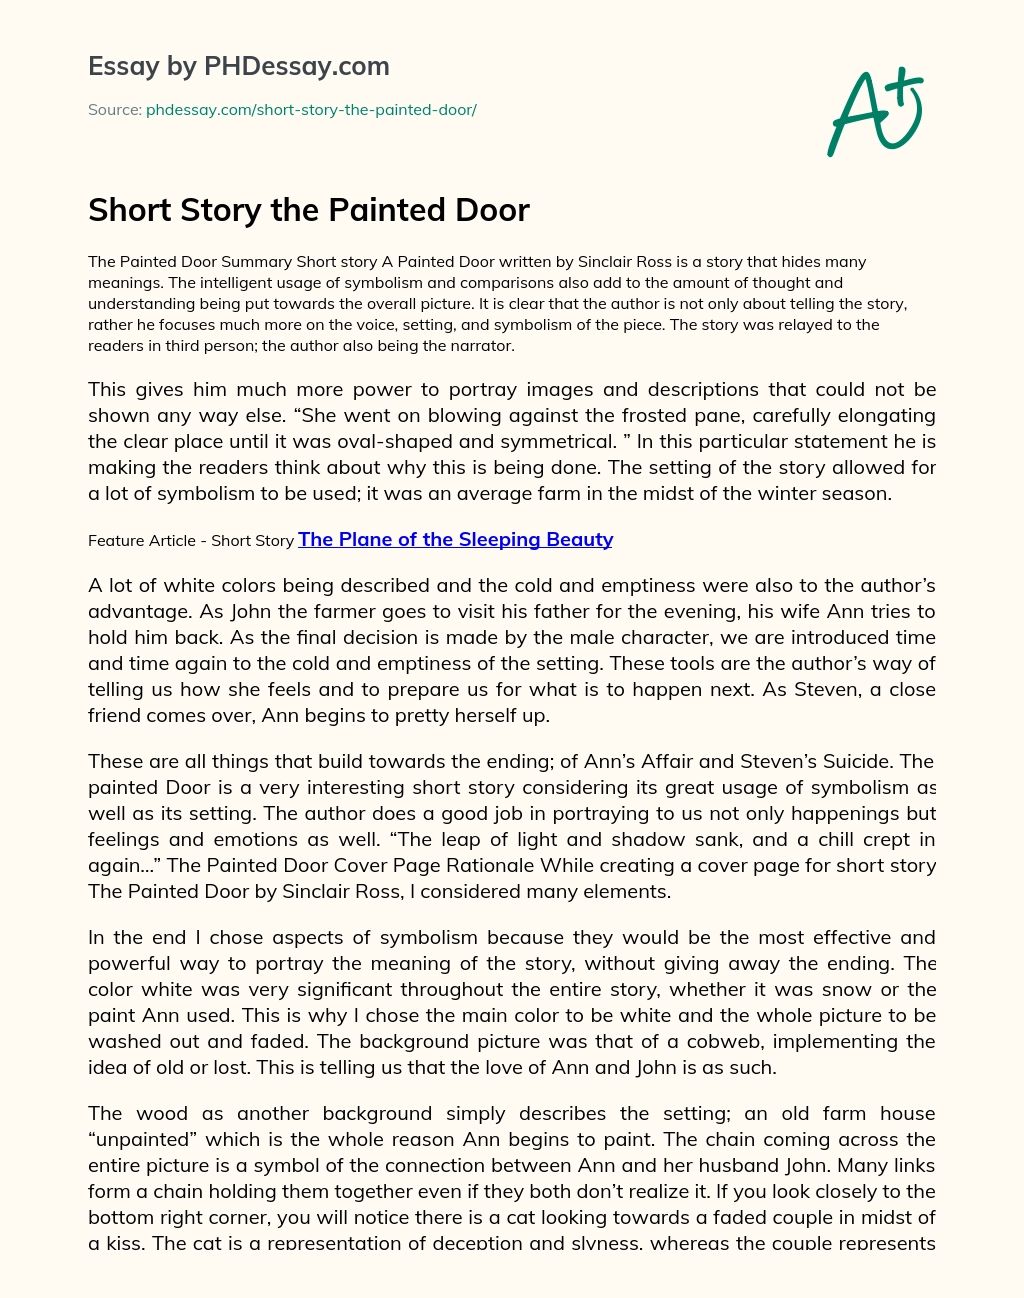 Short Story the Painted Door essay